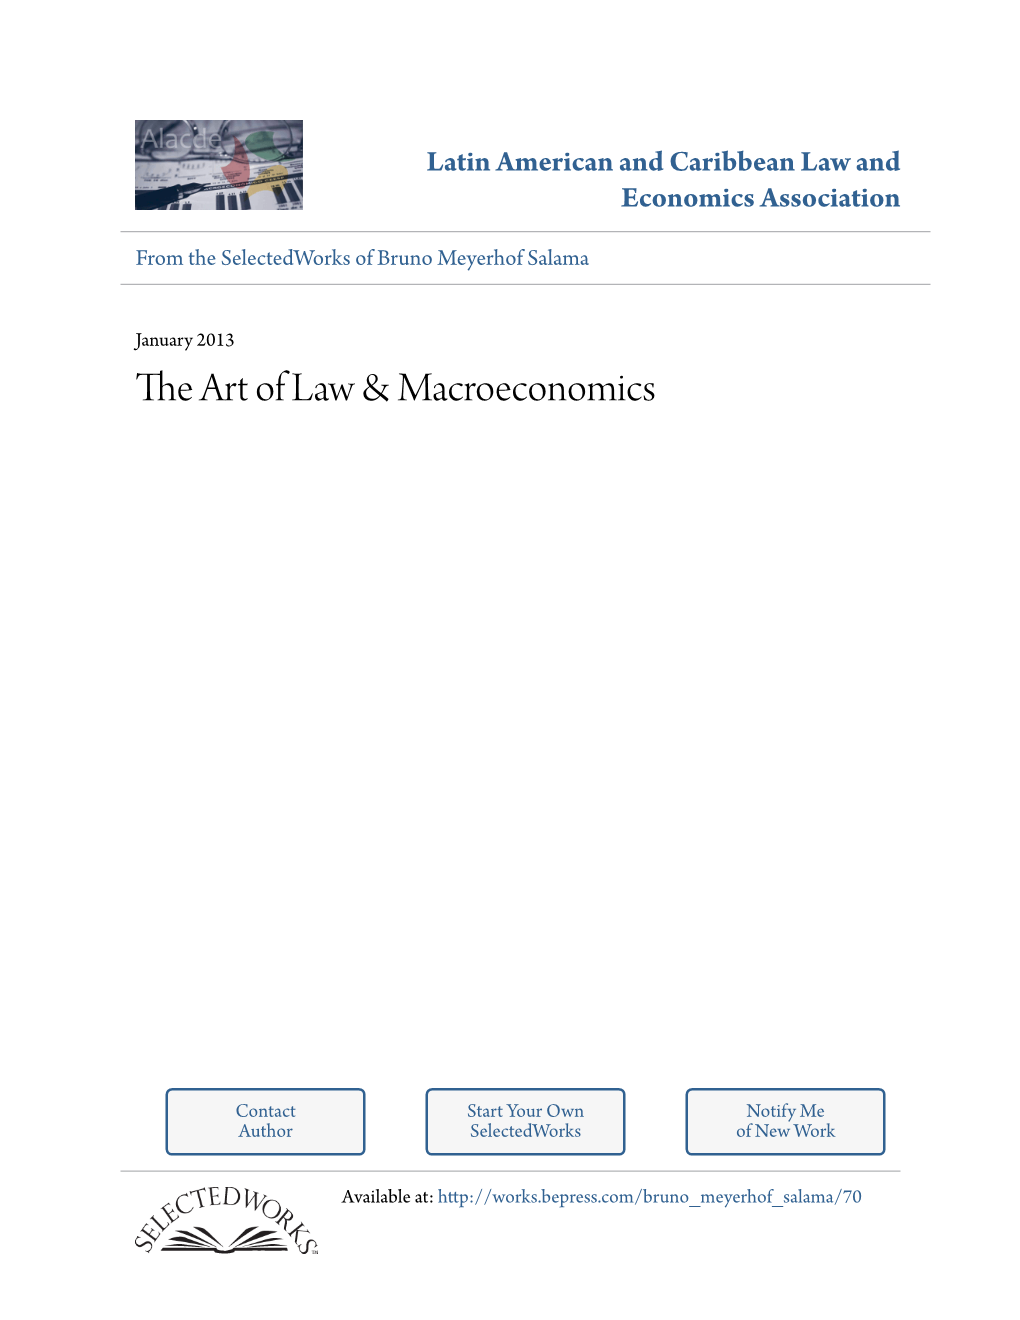 The Art of Law & Macroeconomics